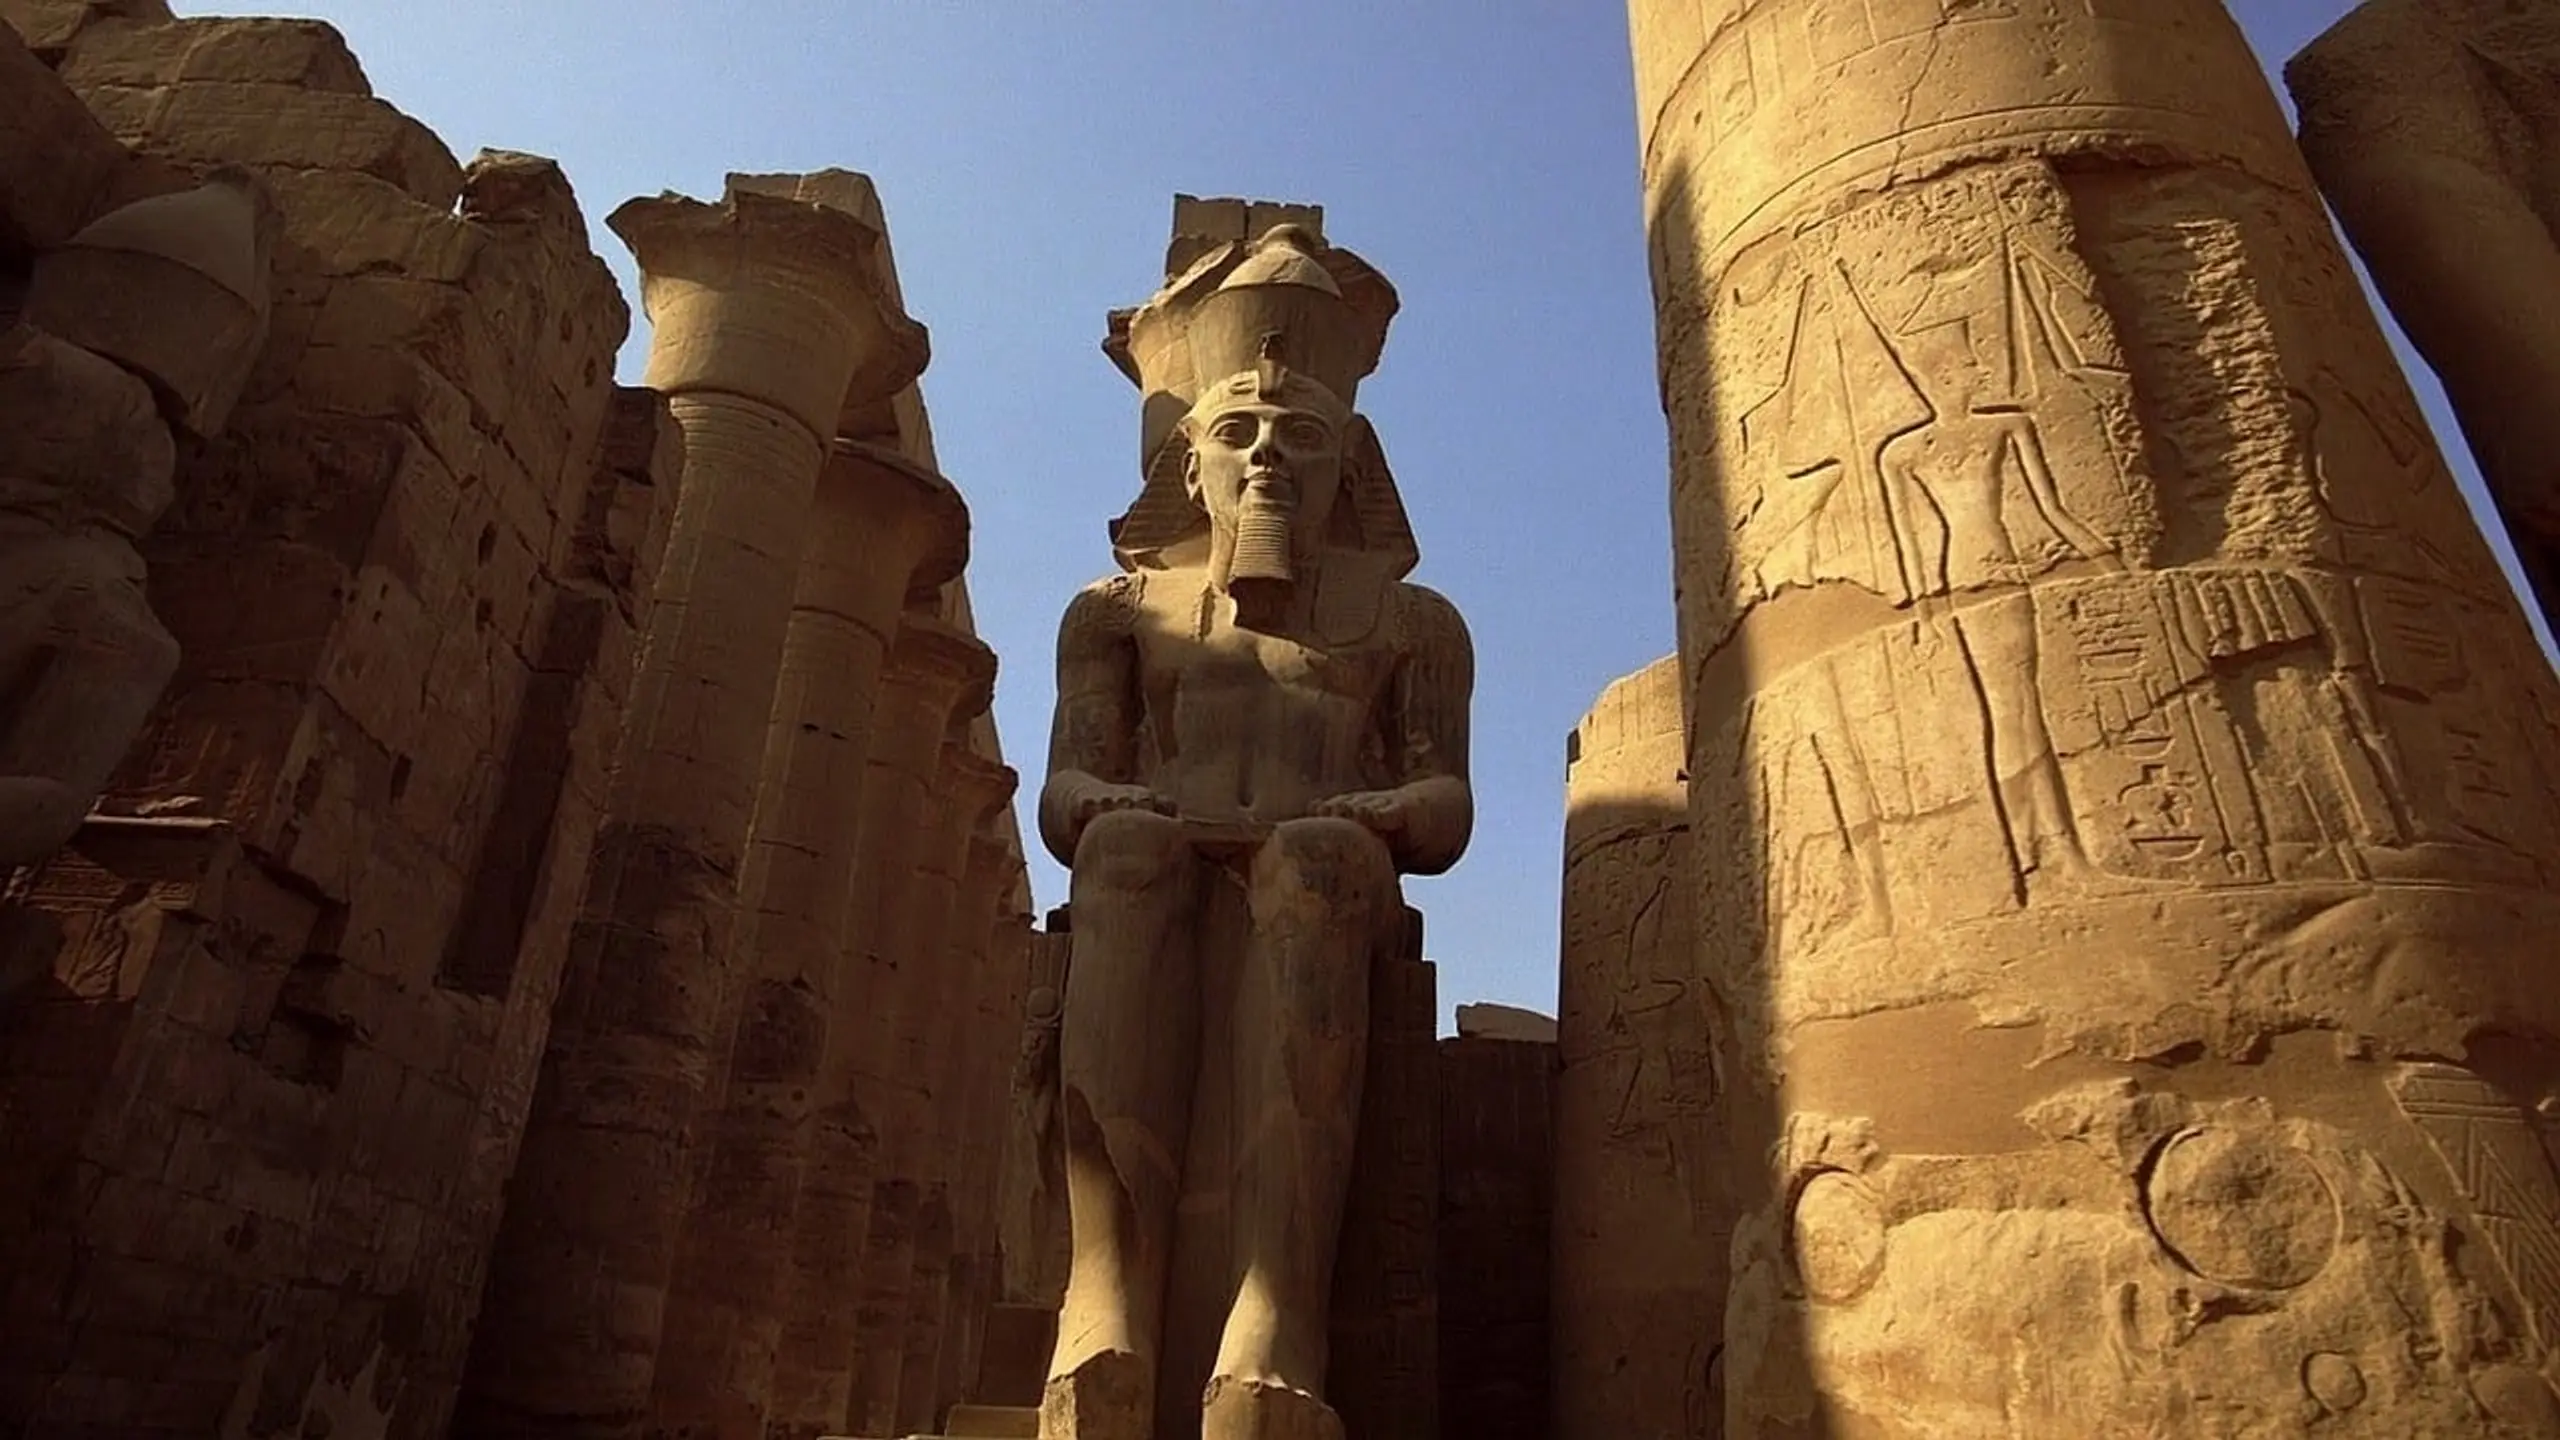 IMAX: Mumien - Geheimnisse der Pharaonen 3D